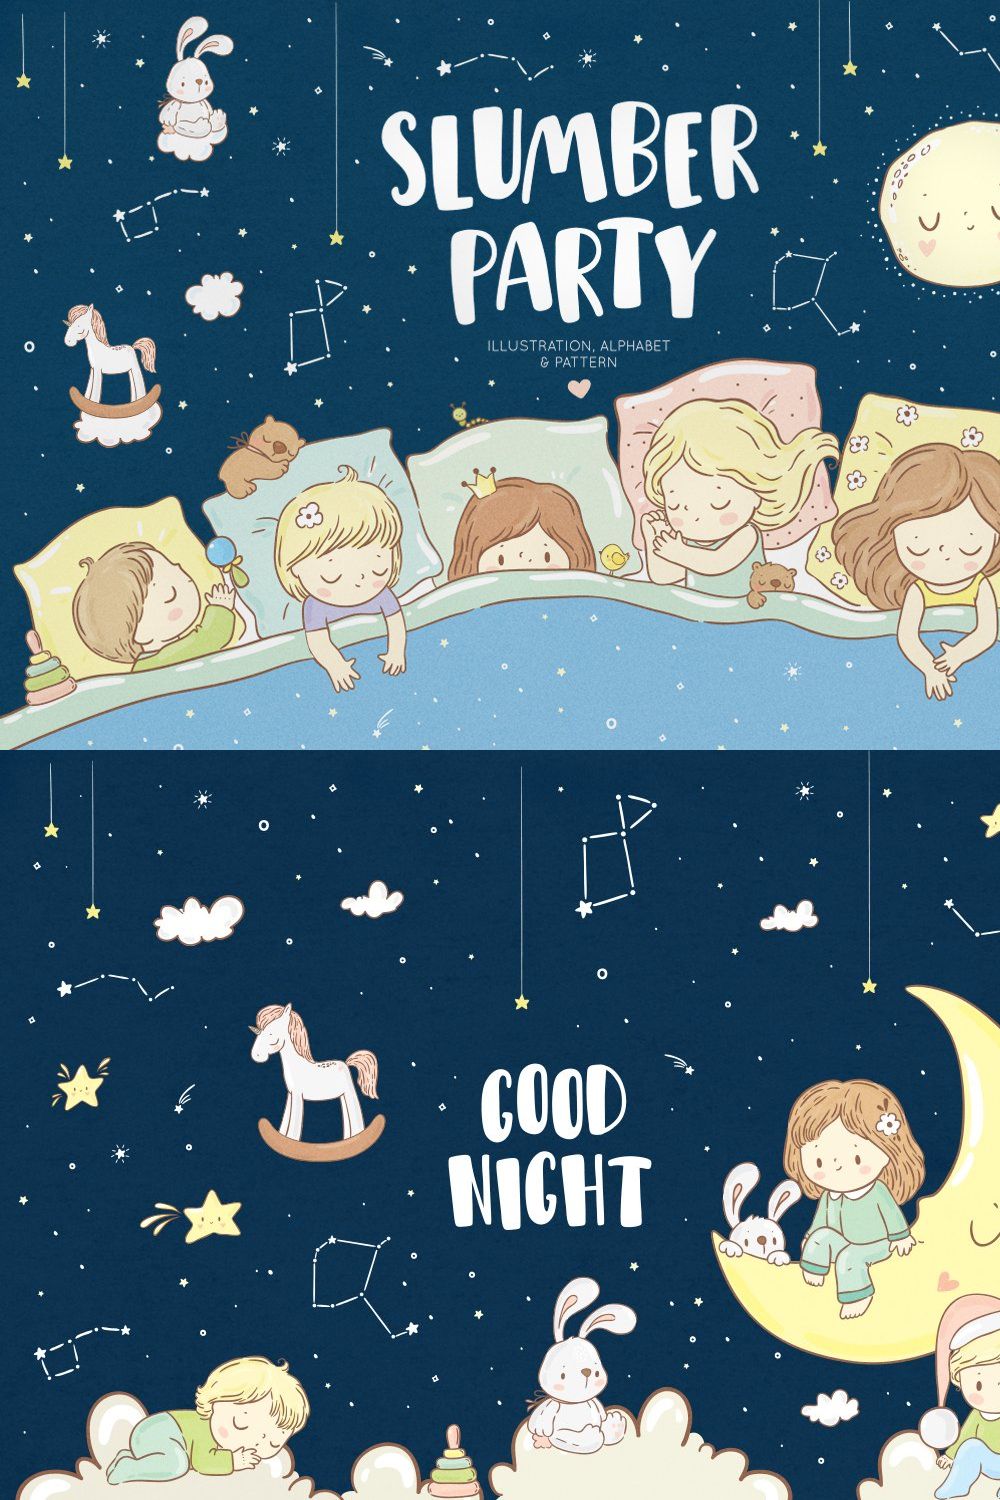 Slumber Party illustration pinterest preview image.